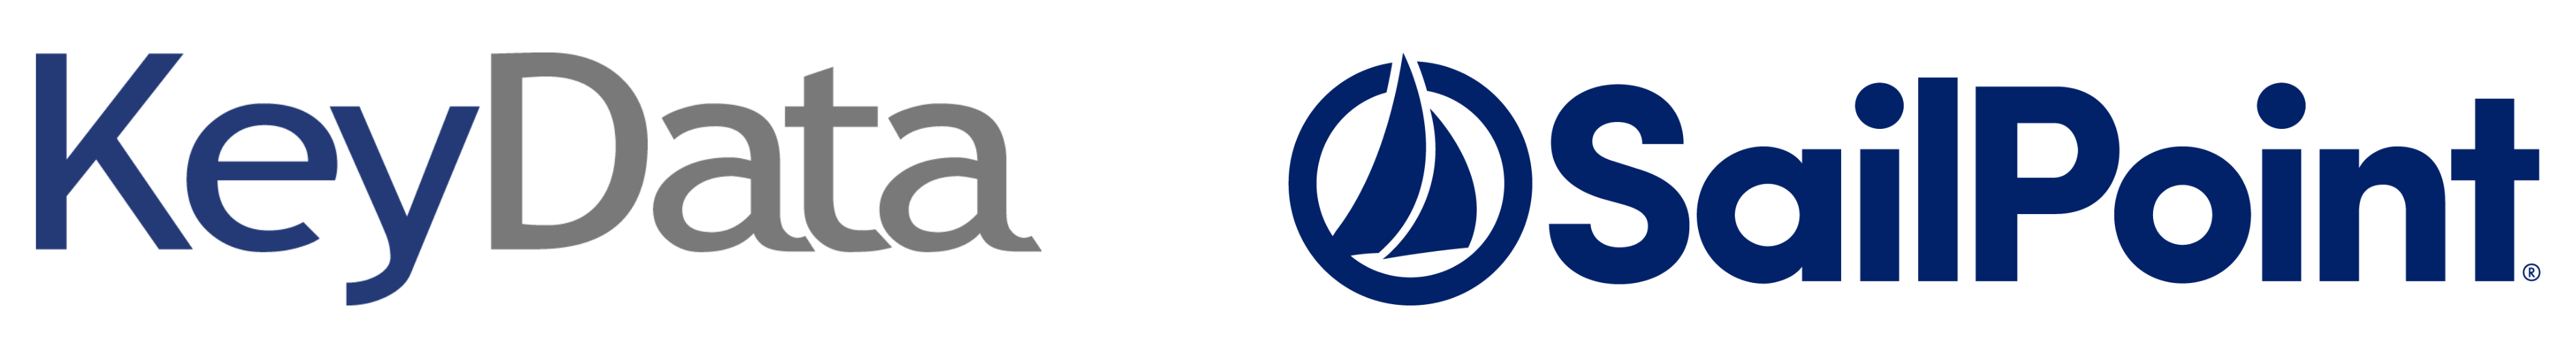 Keydata sailpoint logo colour